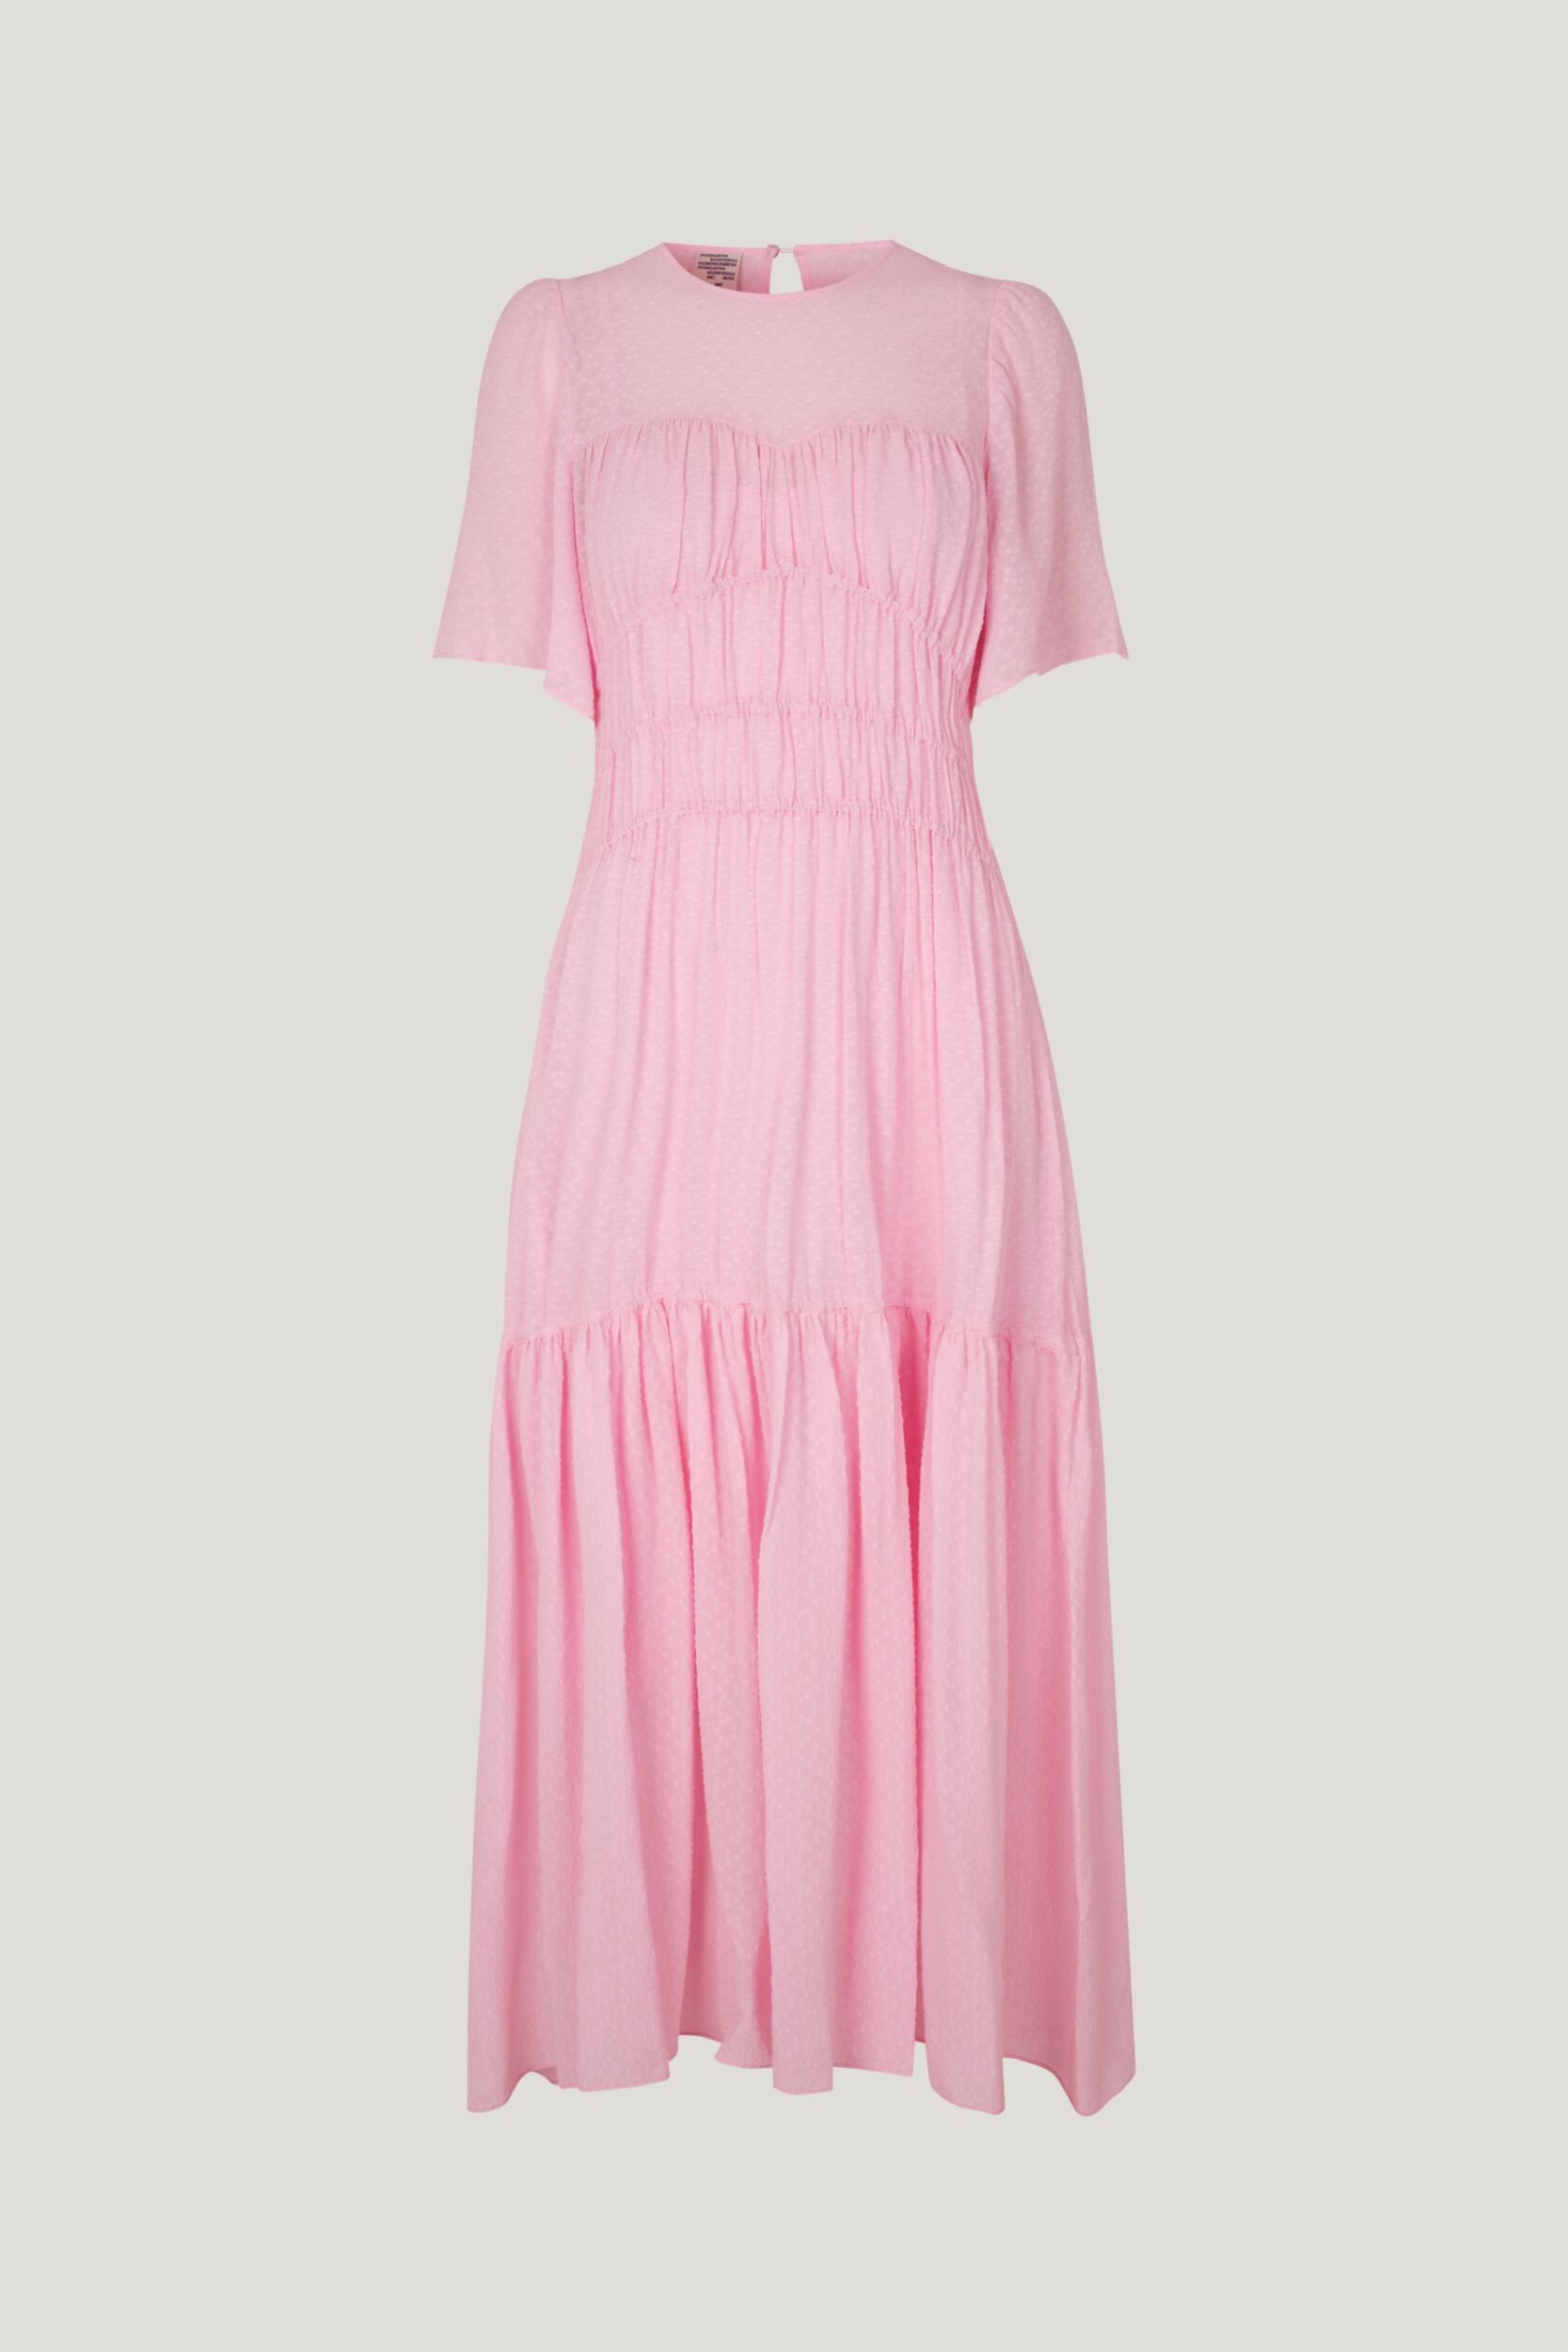 Anissa Parfait Pink Dress – Canopy